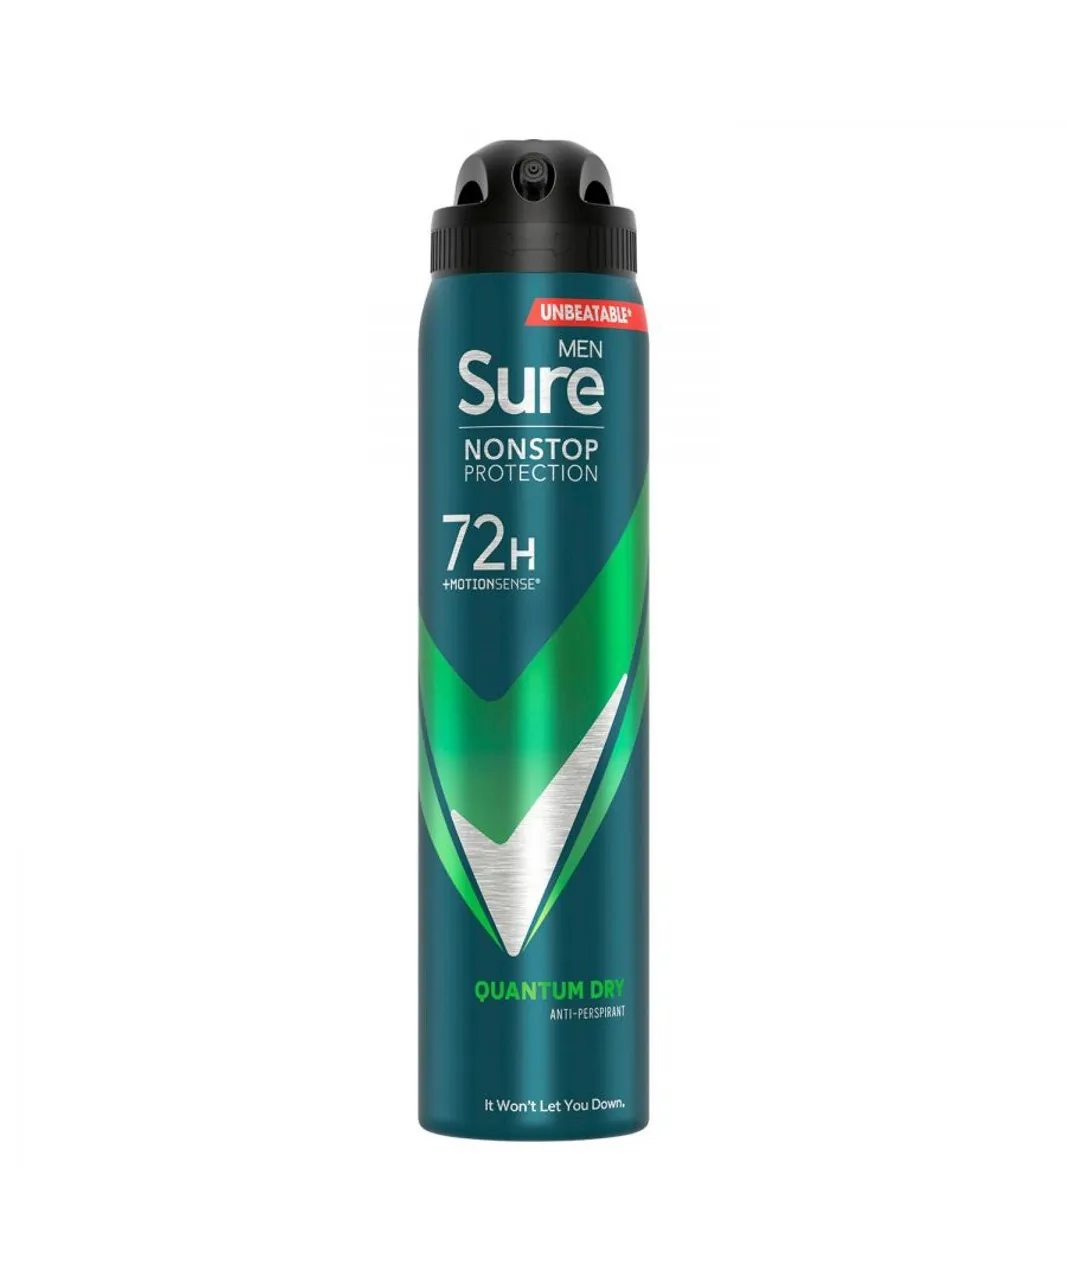 Sure Mens Men Anti-perspirant 72H Nonstop Protection Quantum Dry Deodorant 250ml, 6 Pack - NA - One Size